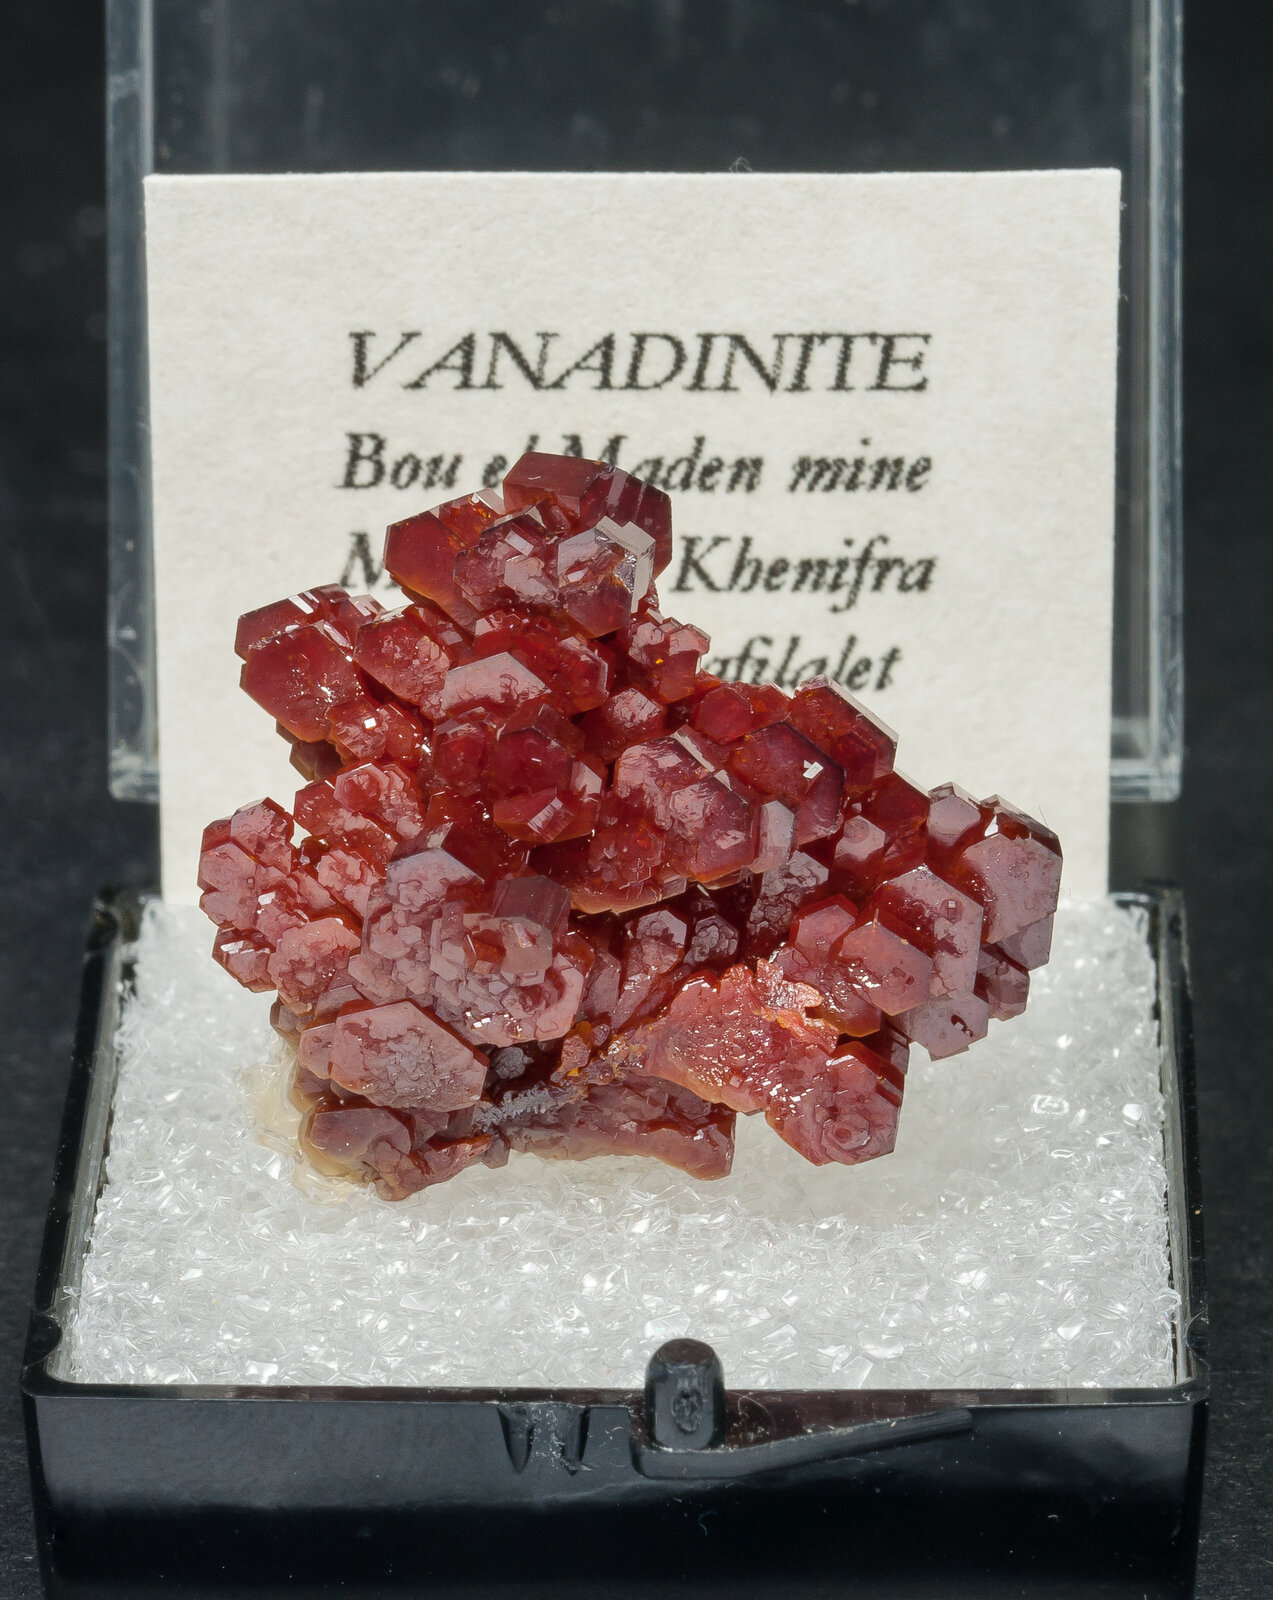 specimens/s_imagesAO4/Vanadinite-TRR14AO4f1.jpg